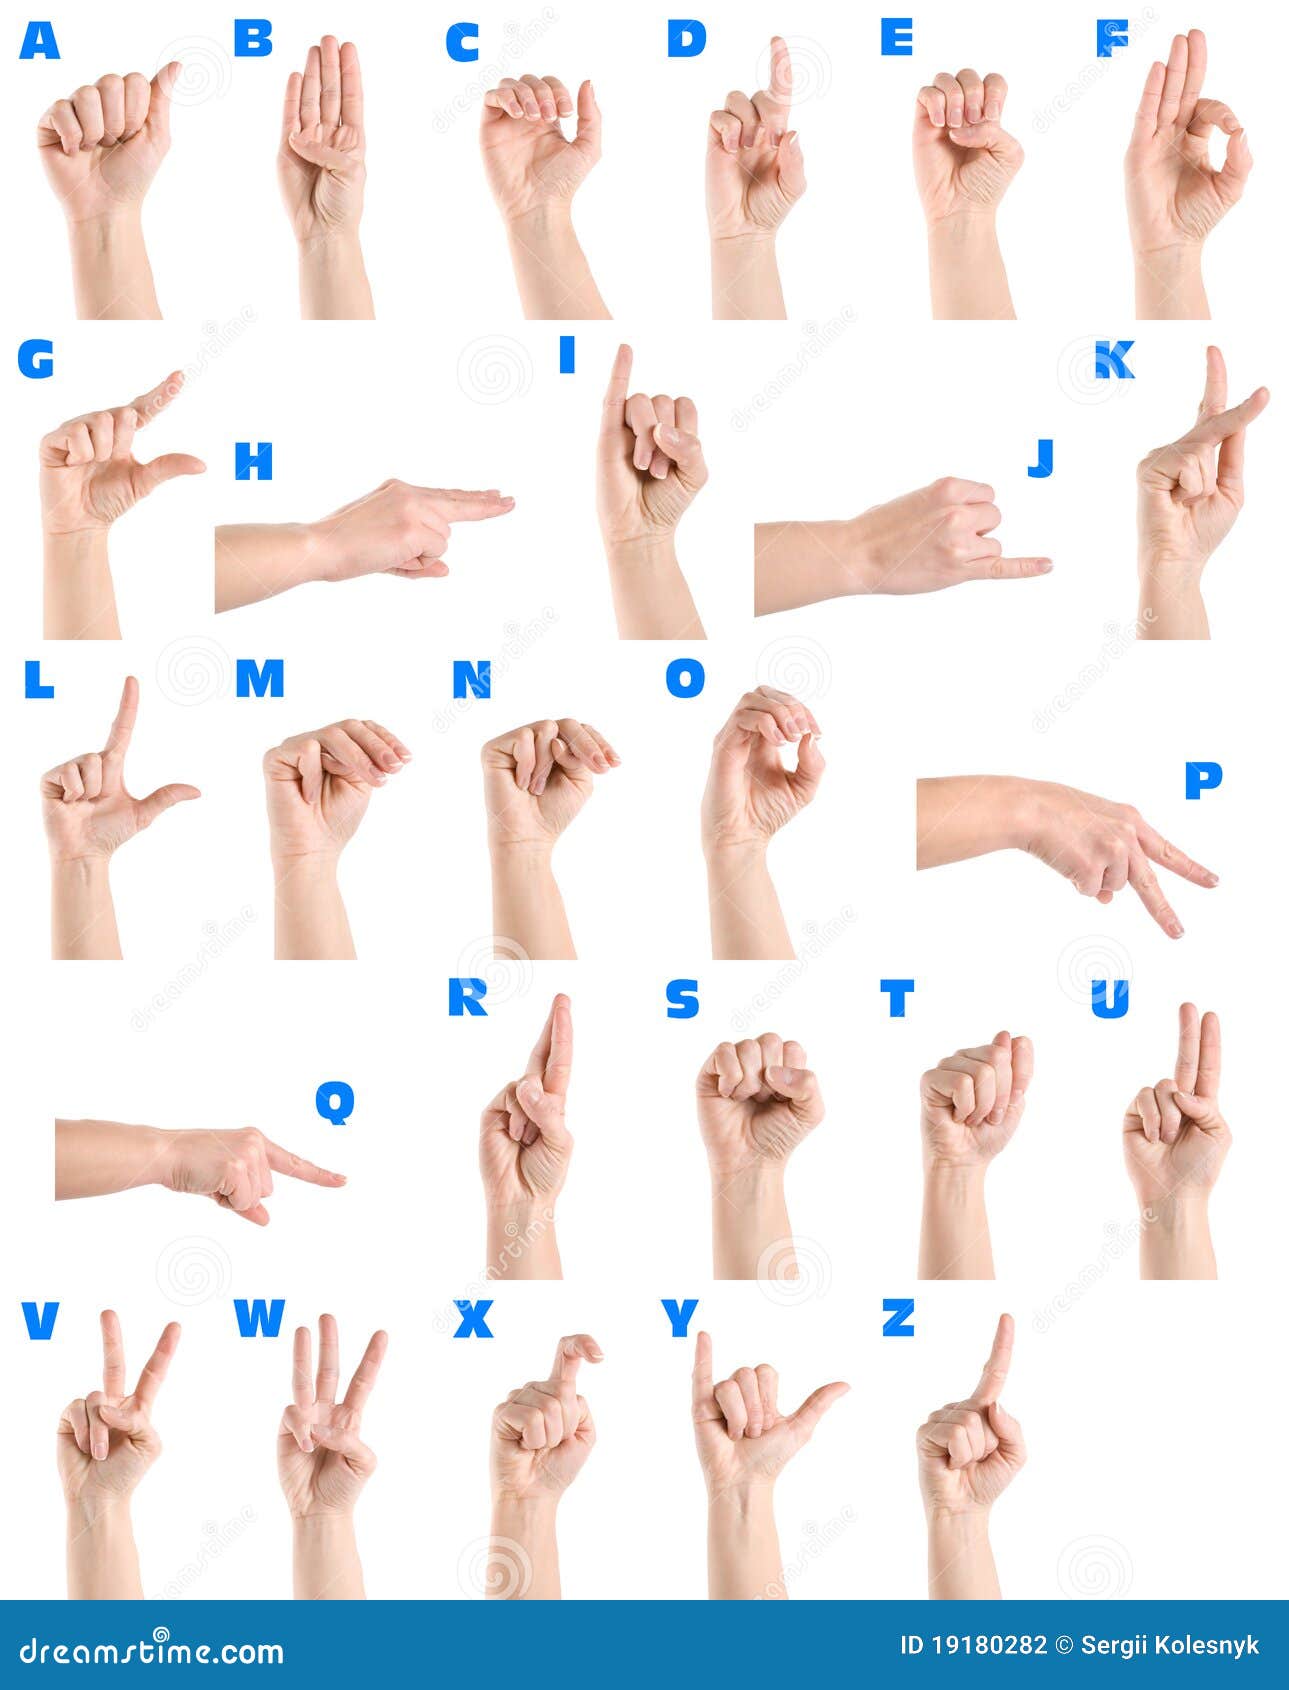 hand sign language alphabet